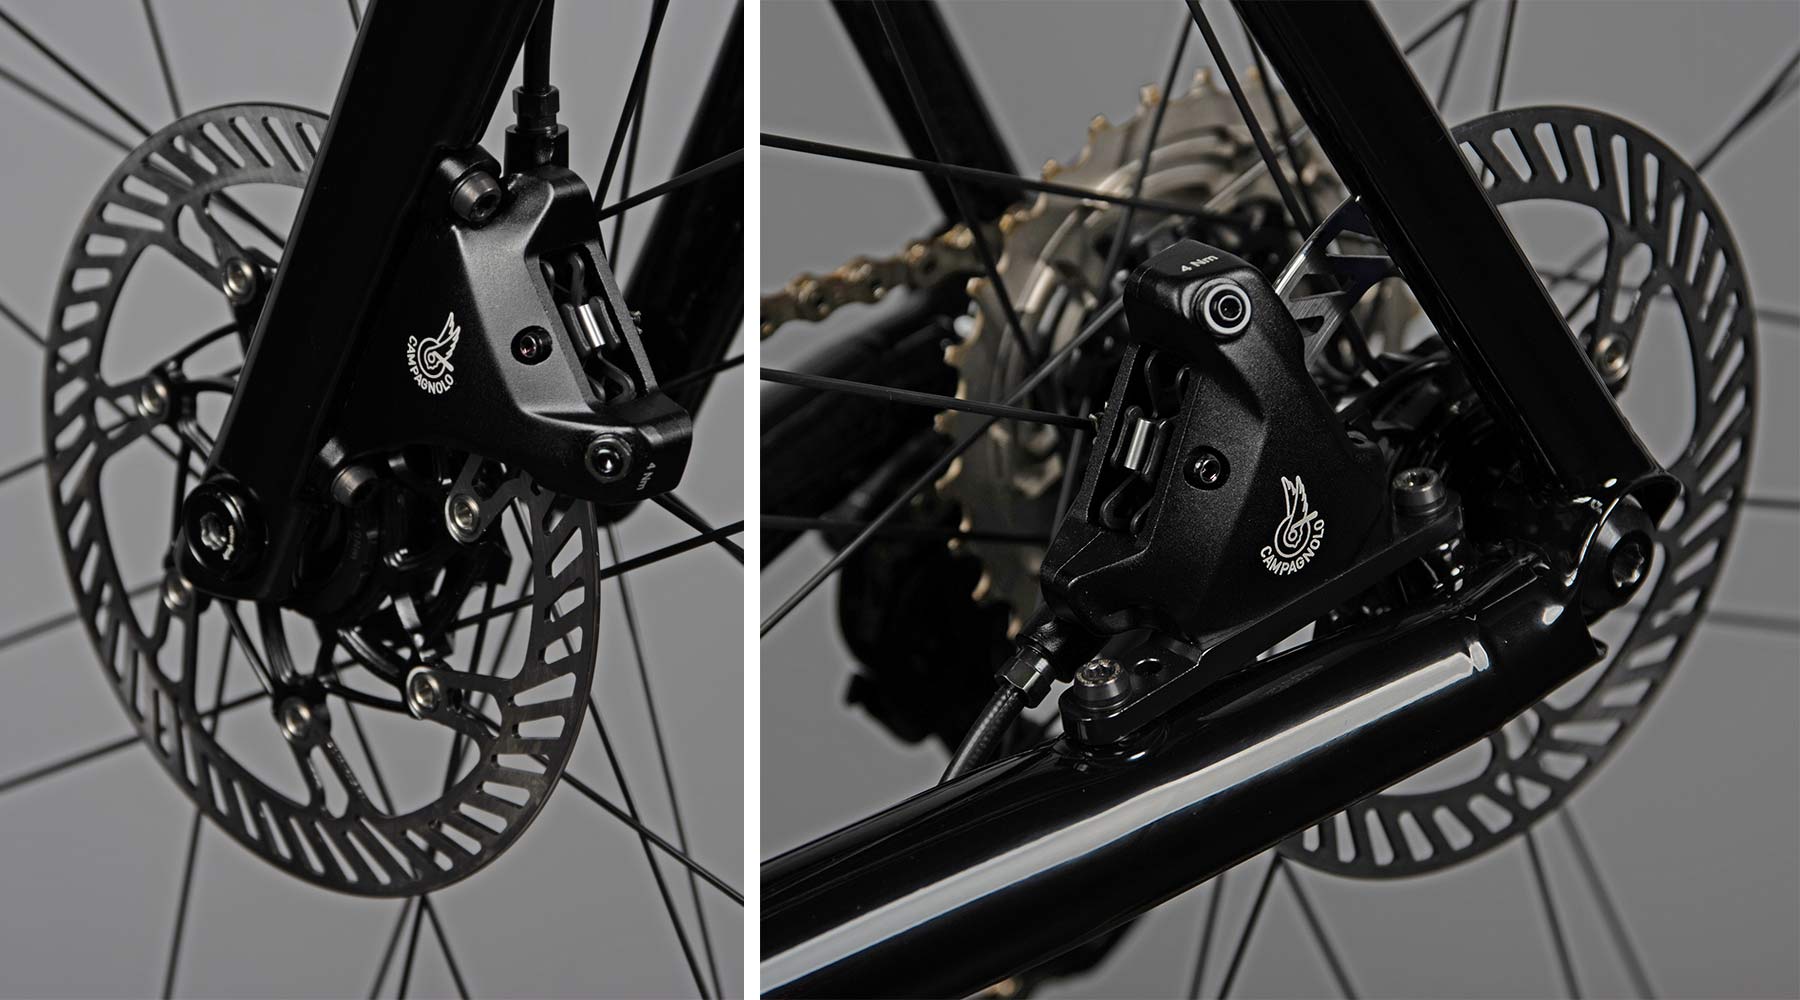 Pegoretti Round Disc modern stainless steel disc brake road bike, made-in-Italy, 12mm thru-axle, flat mount disc brakes